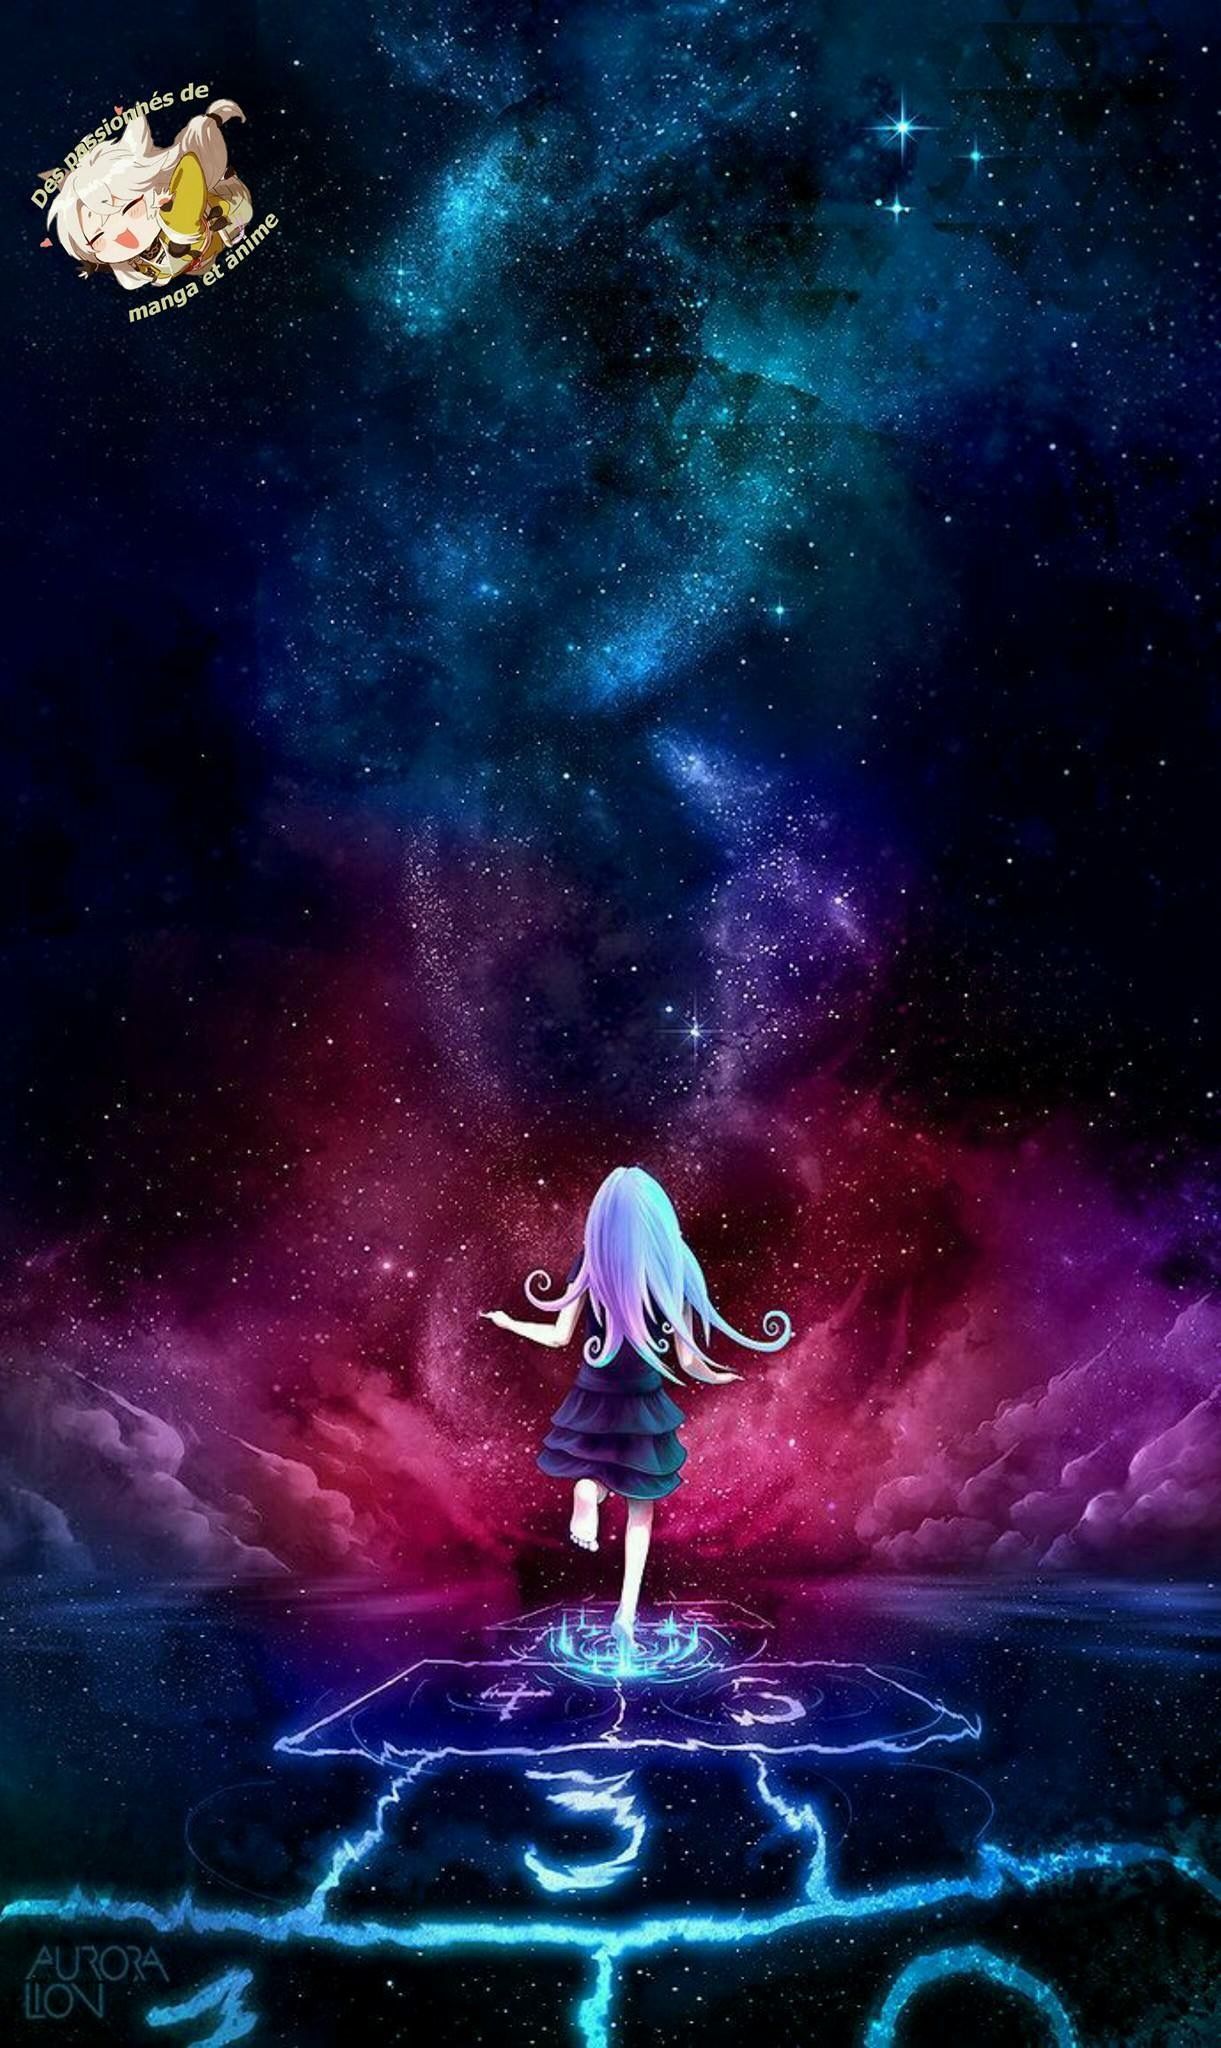 Anime Galaxy Girl Wallpaper Free Anime Galaxy Girl Background